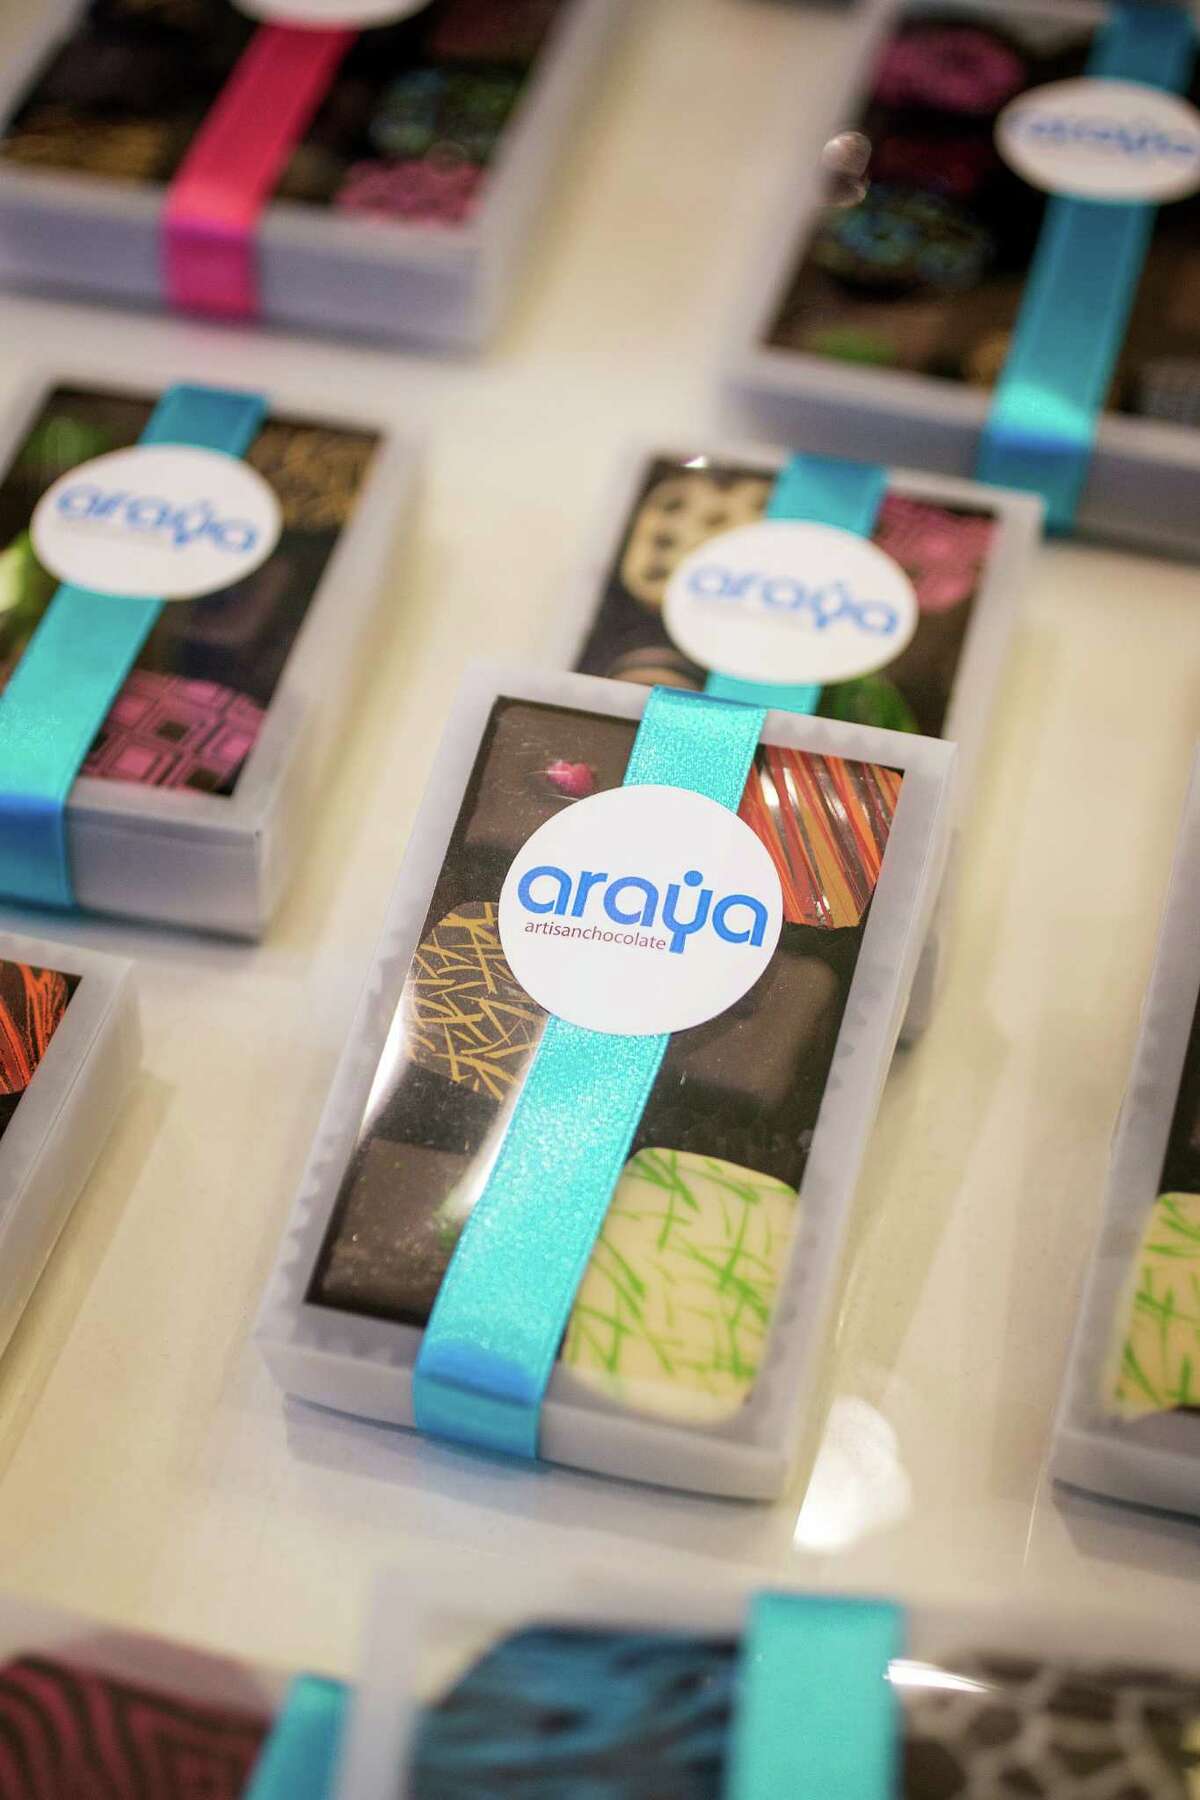 An assortment of chocolates are seen at Araya Artisanal Chocolates in River Oaks